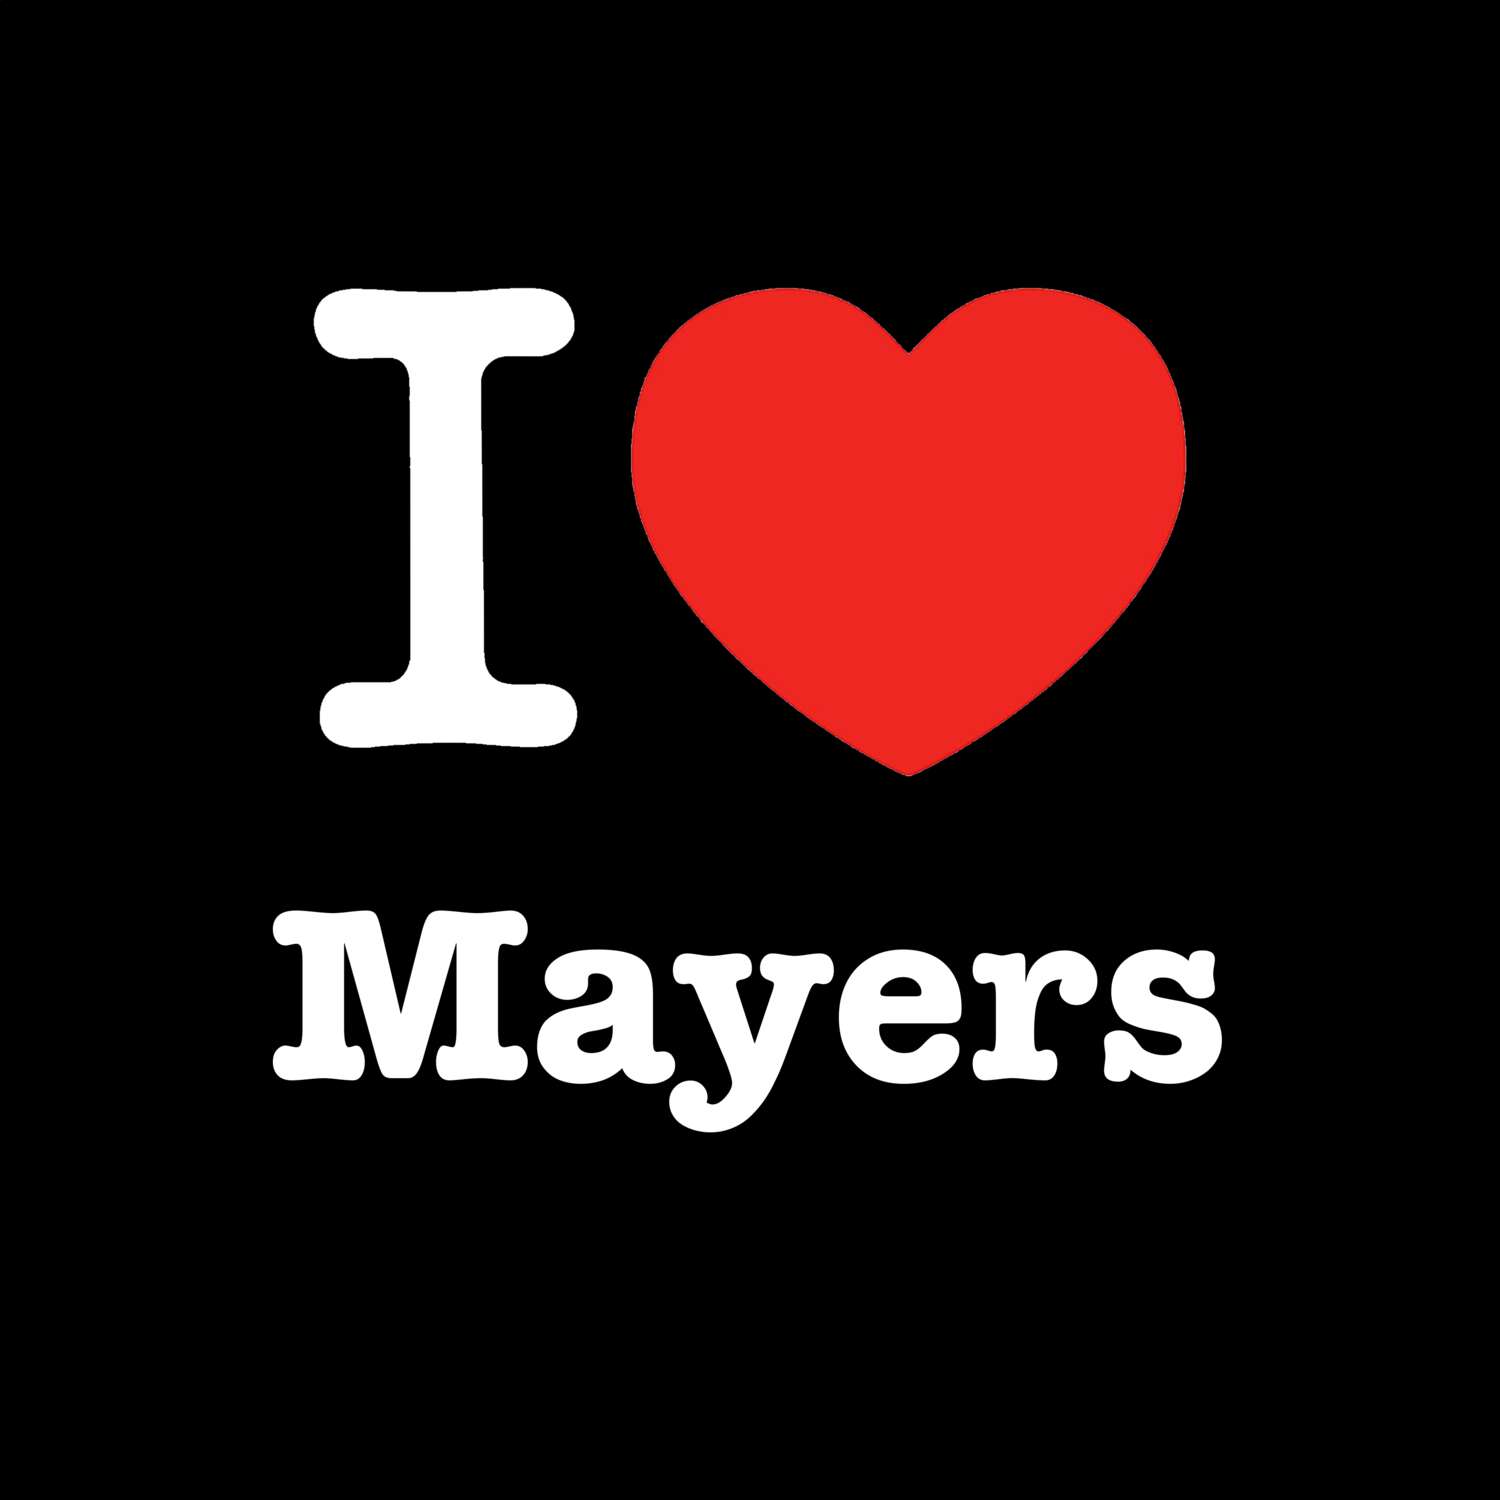 Mayers T-Shirt »I love«